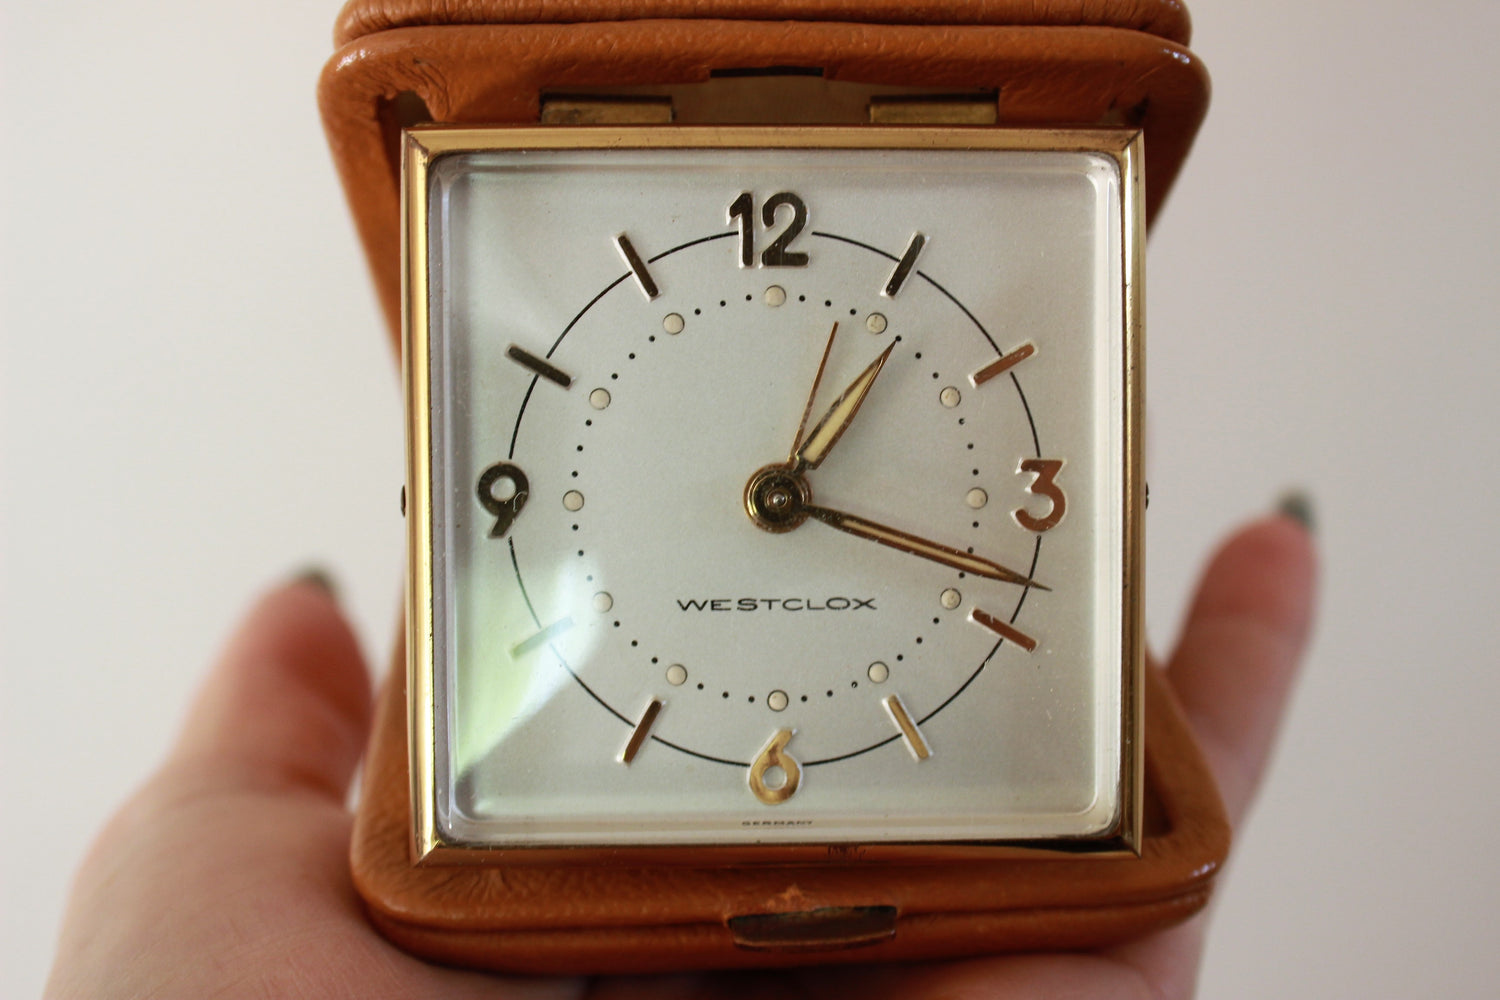 Vintage 1960s Westclox Travette Alarm Clock, New in Box